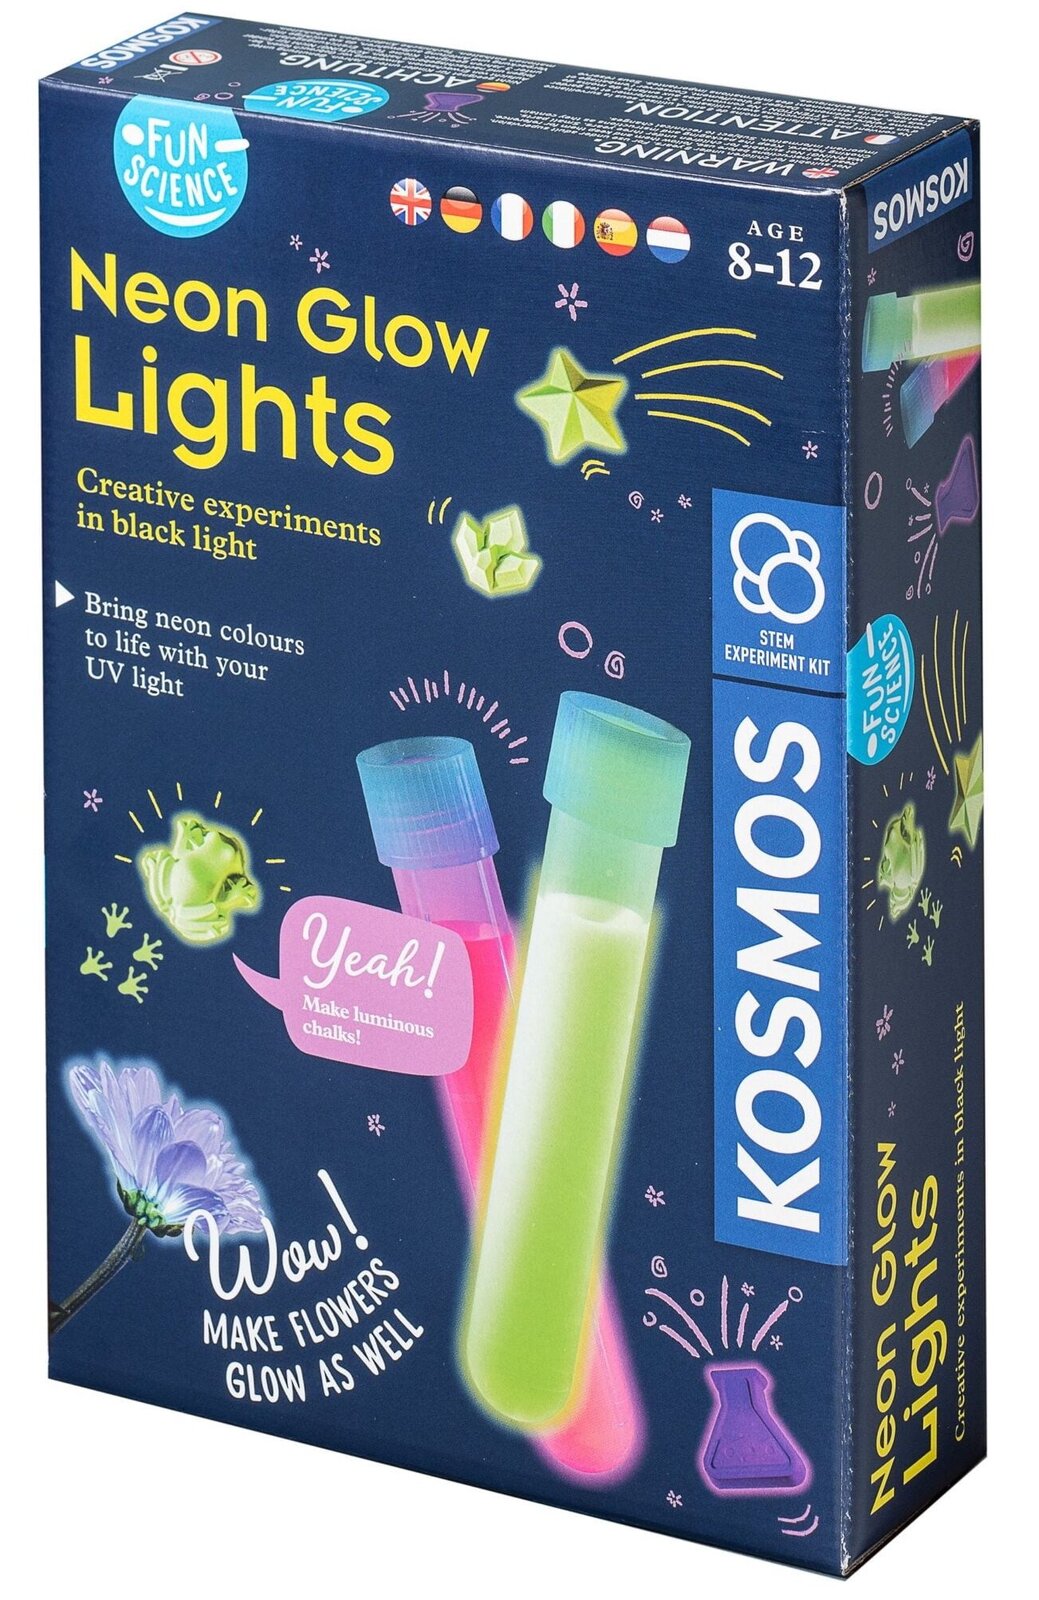 Neon Glow Lights image